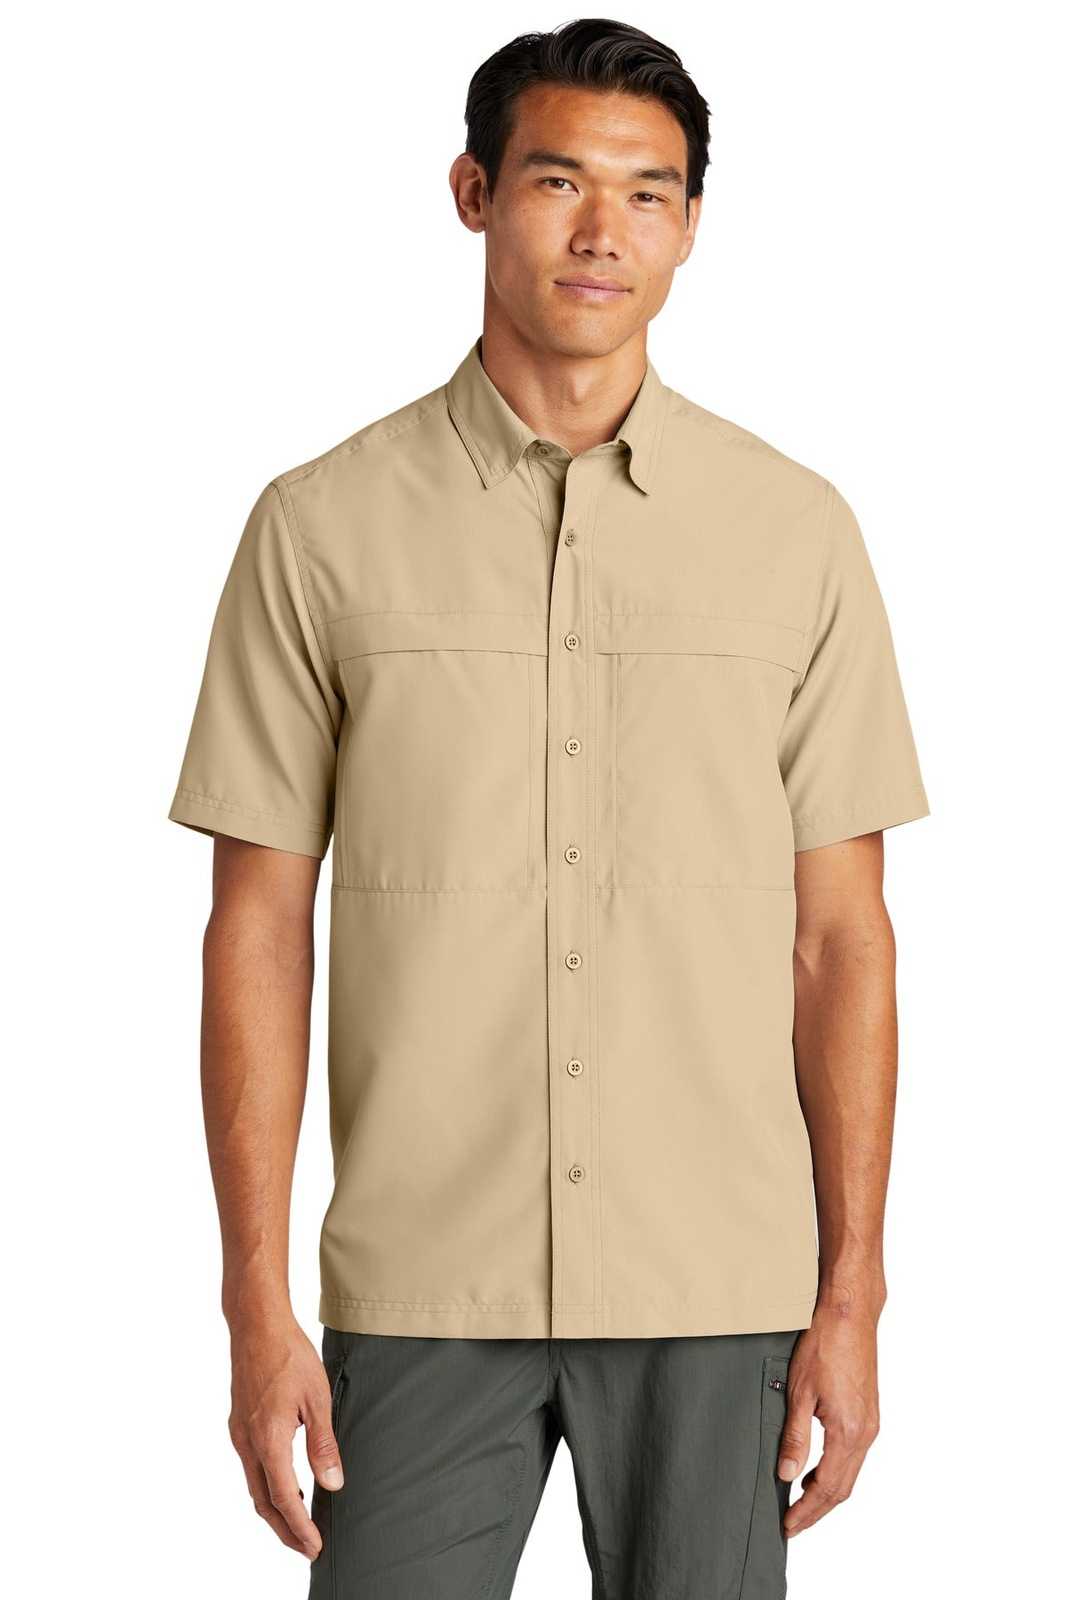 Port Authority W961 Short Sleeve UV Daybreak Shirt - Oat - HIT a Double - 1